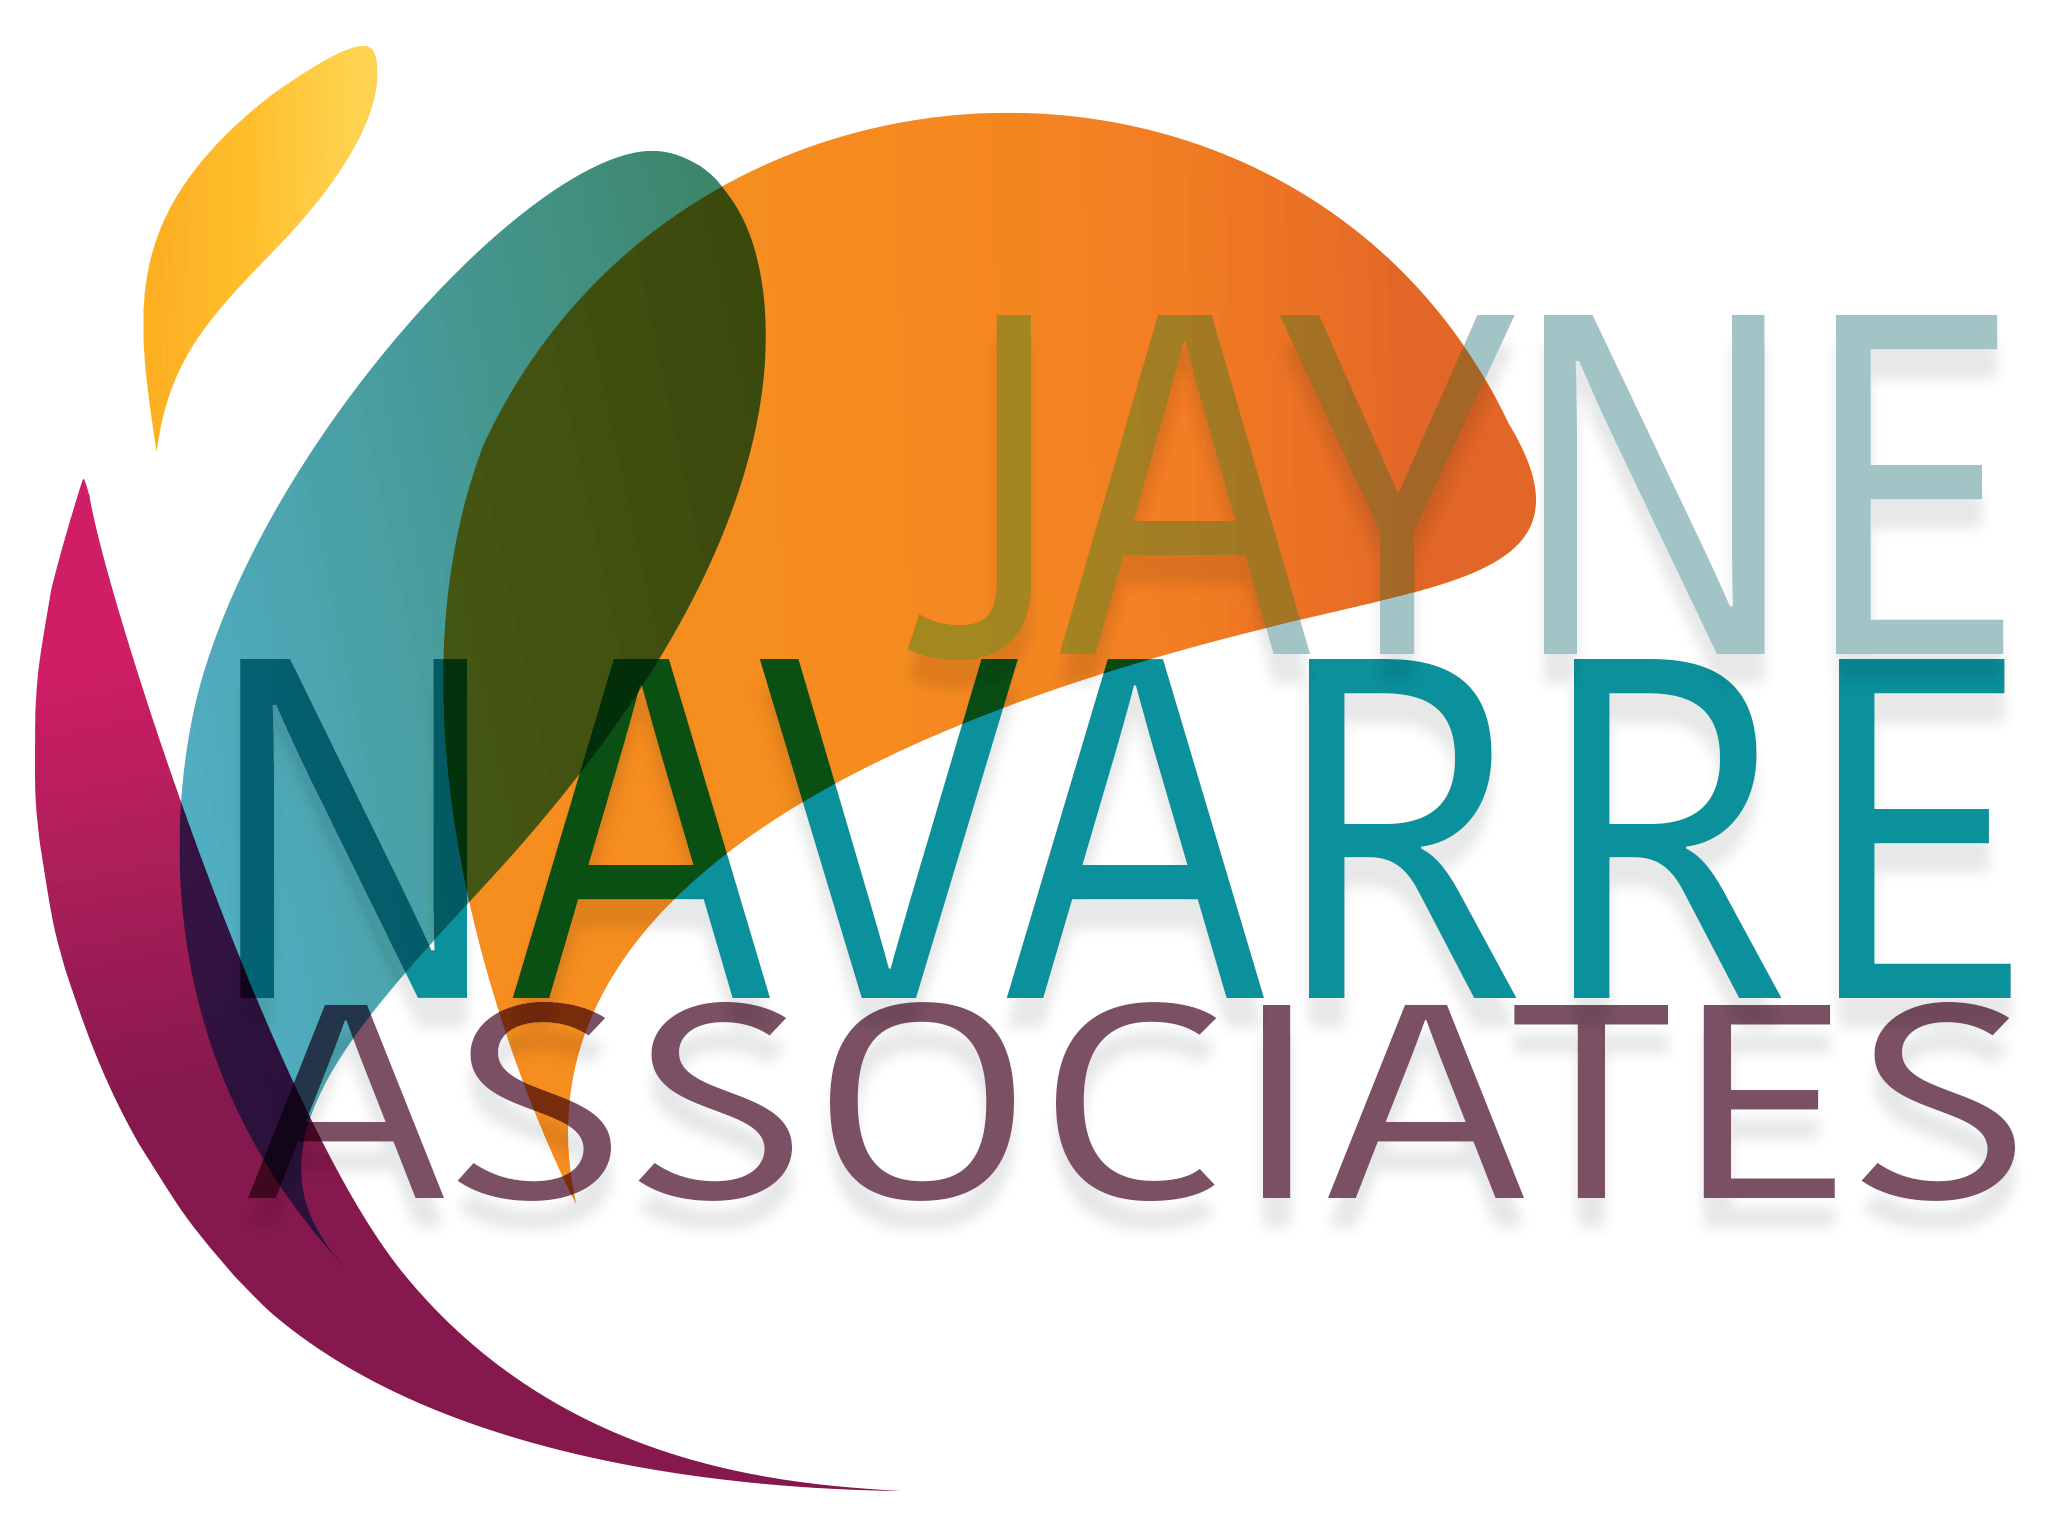 Navarre Logo - Portfolio Navarre Associates